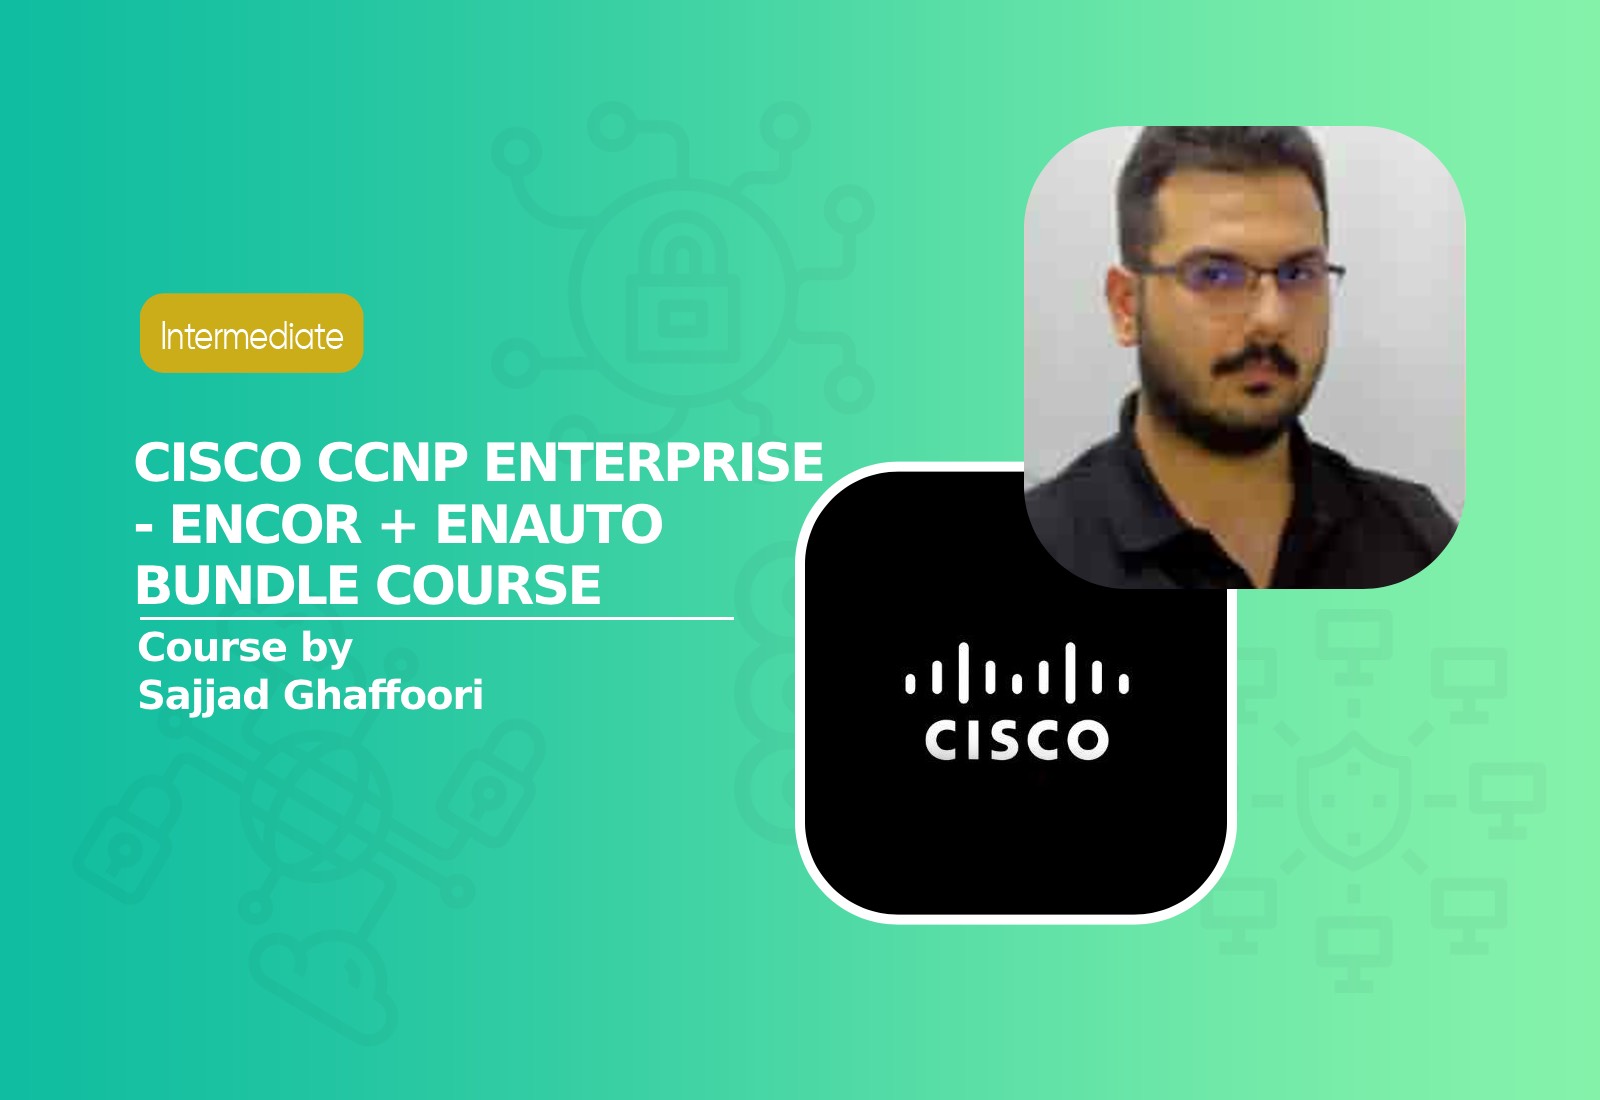 Cisco CCNP Enterprise - ENCOR + ENAUTO Bundle Course 